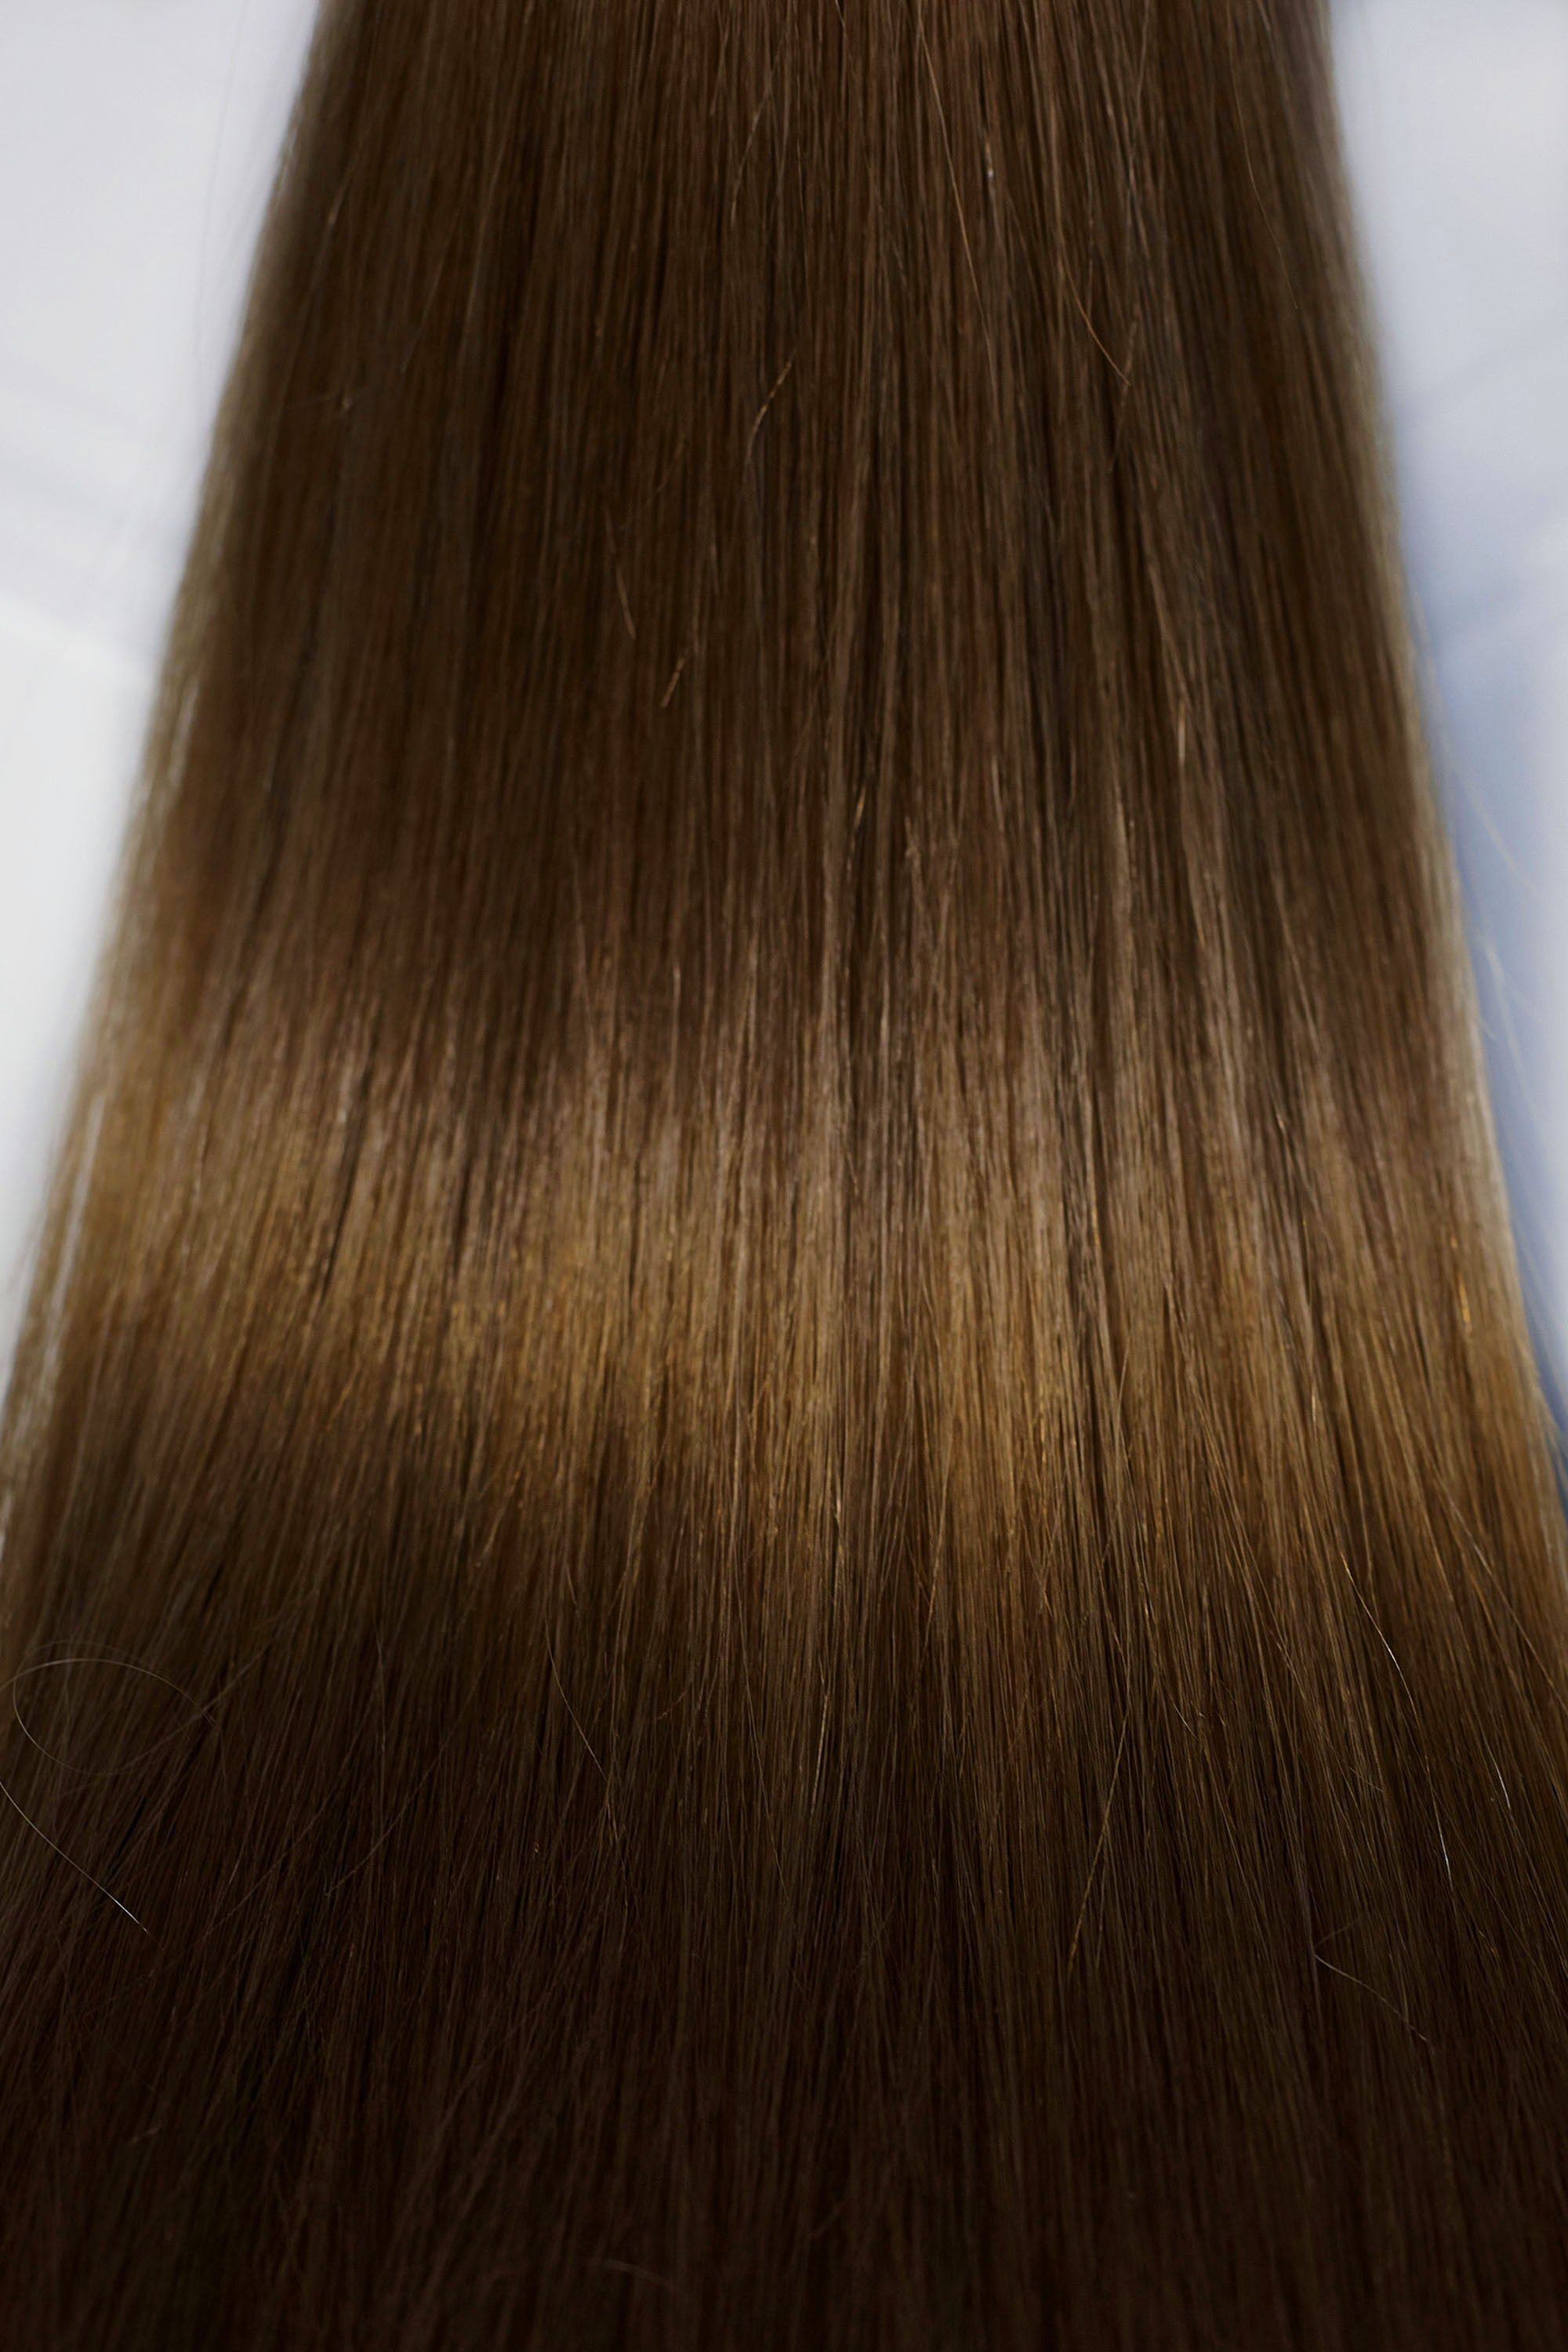 Behair professional Keratin Tip "Premium" 16" (40cm) Natural Straight Honey Walnut Brown #5 - 25g (1g each pcs) hair extensions